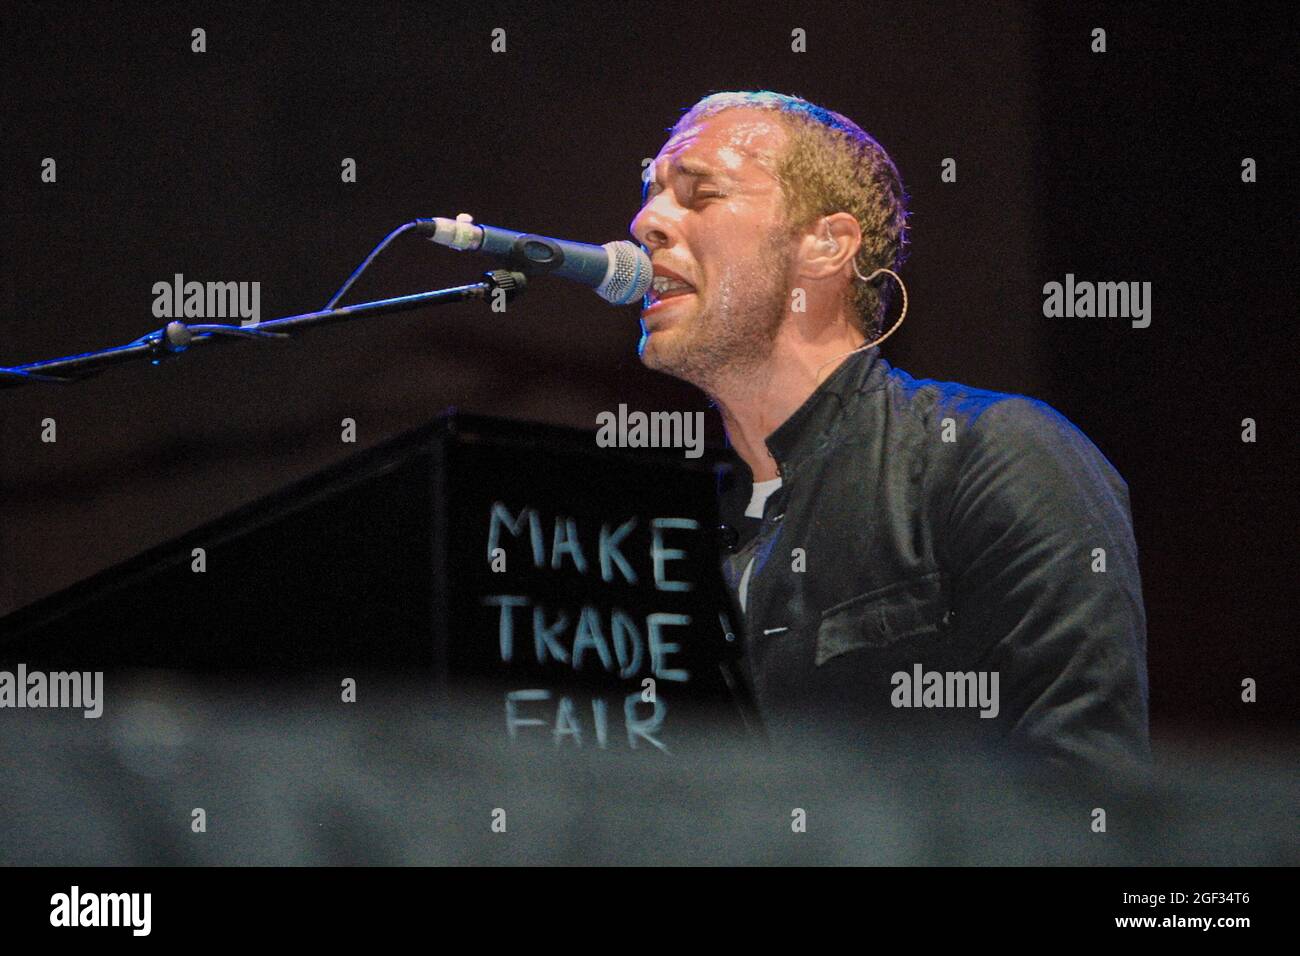 Chris Martin - Coldplay, V2003, Hylands Park, Chelmsford, Essex, Royaume-Uni - 16 août 2003 Banque D'Images